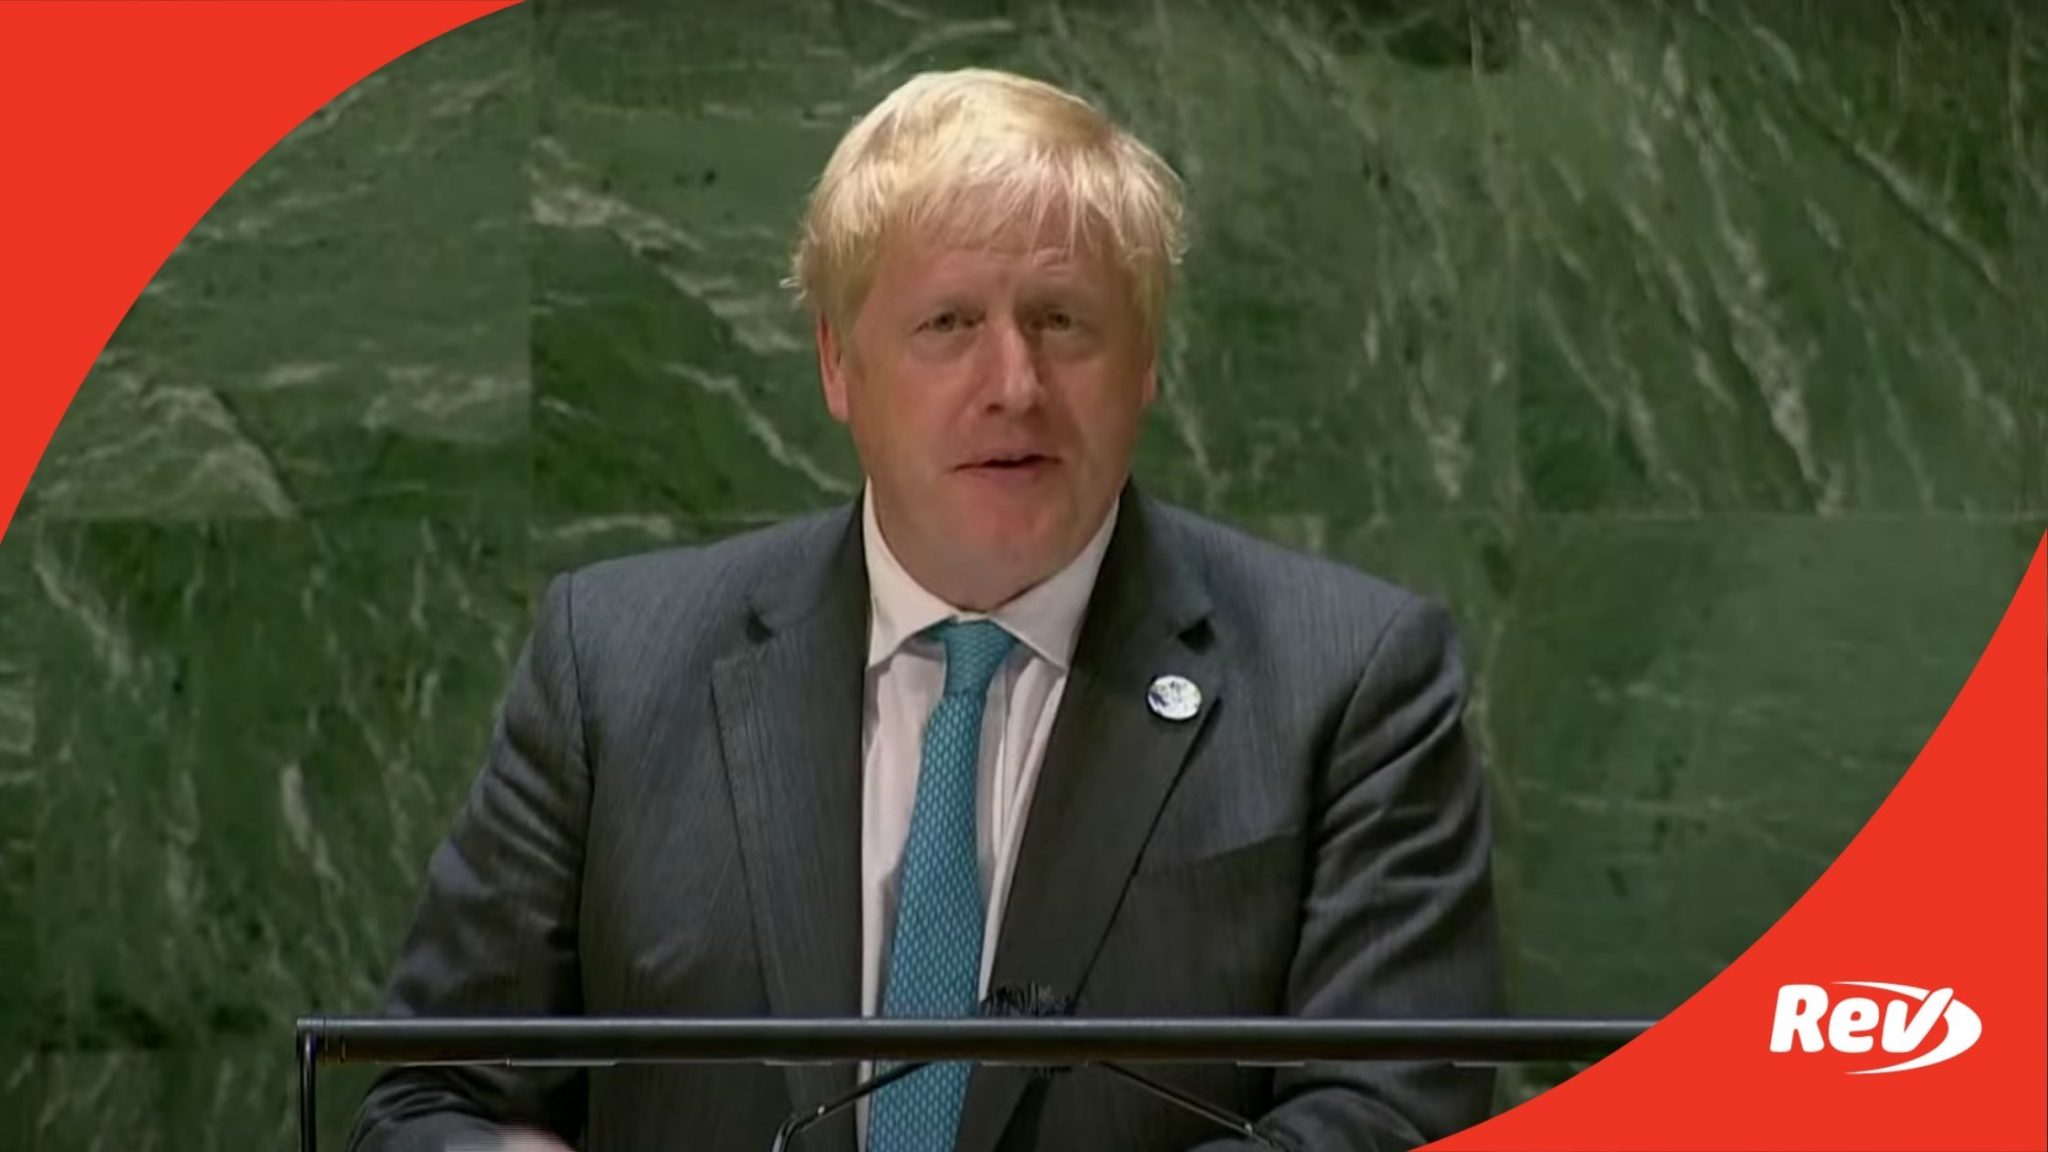 UK Boris Johnson UN General Assembly Speech Transcript